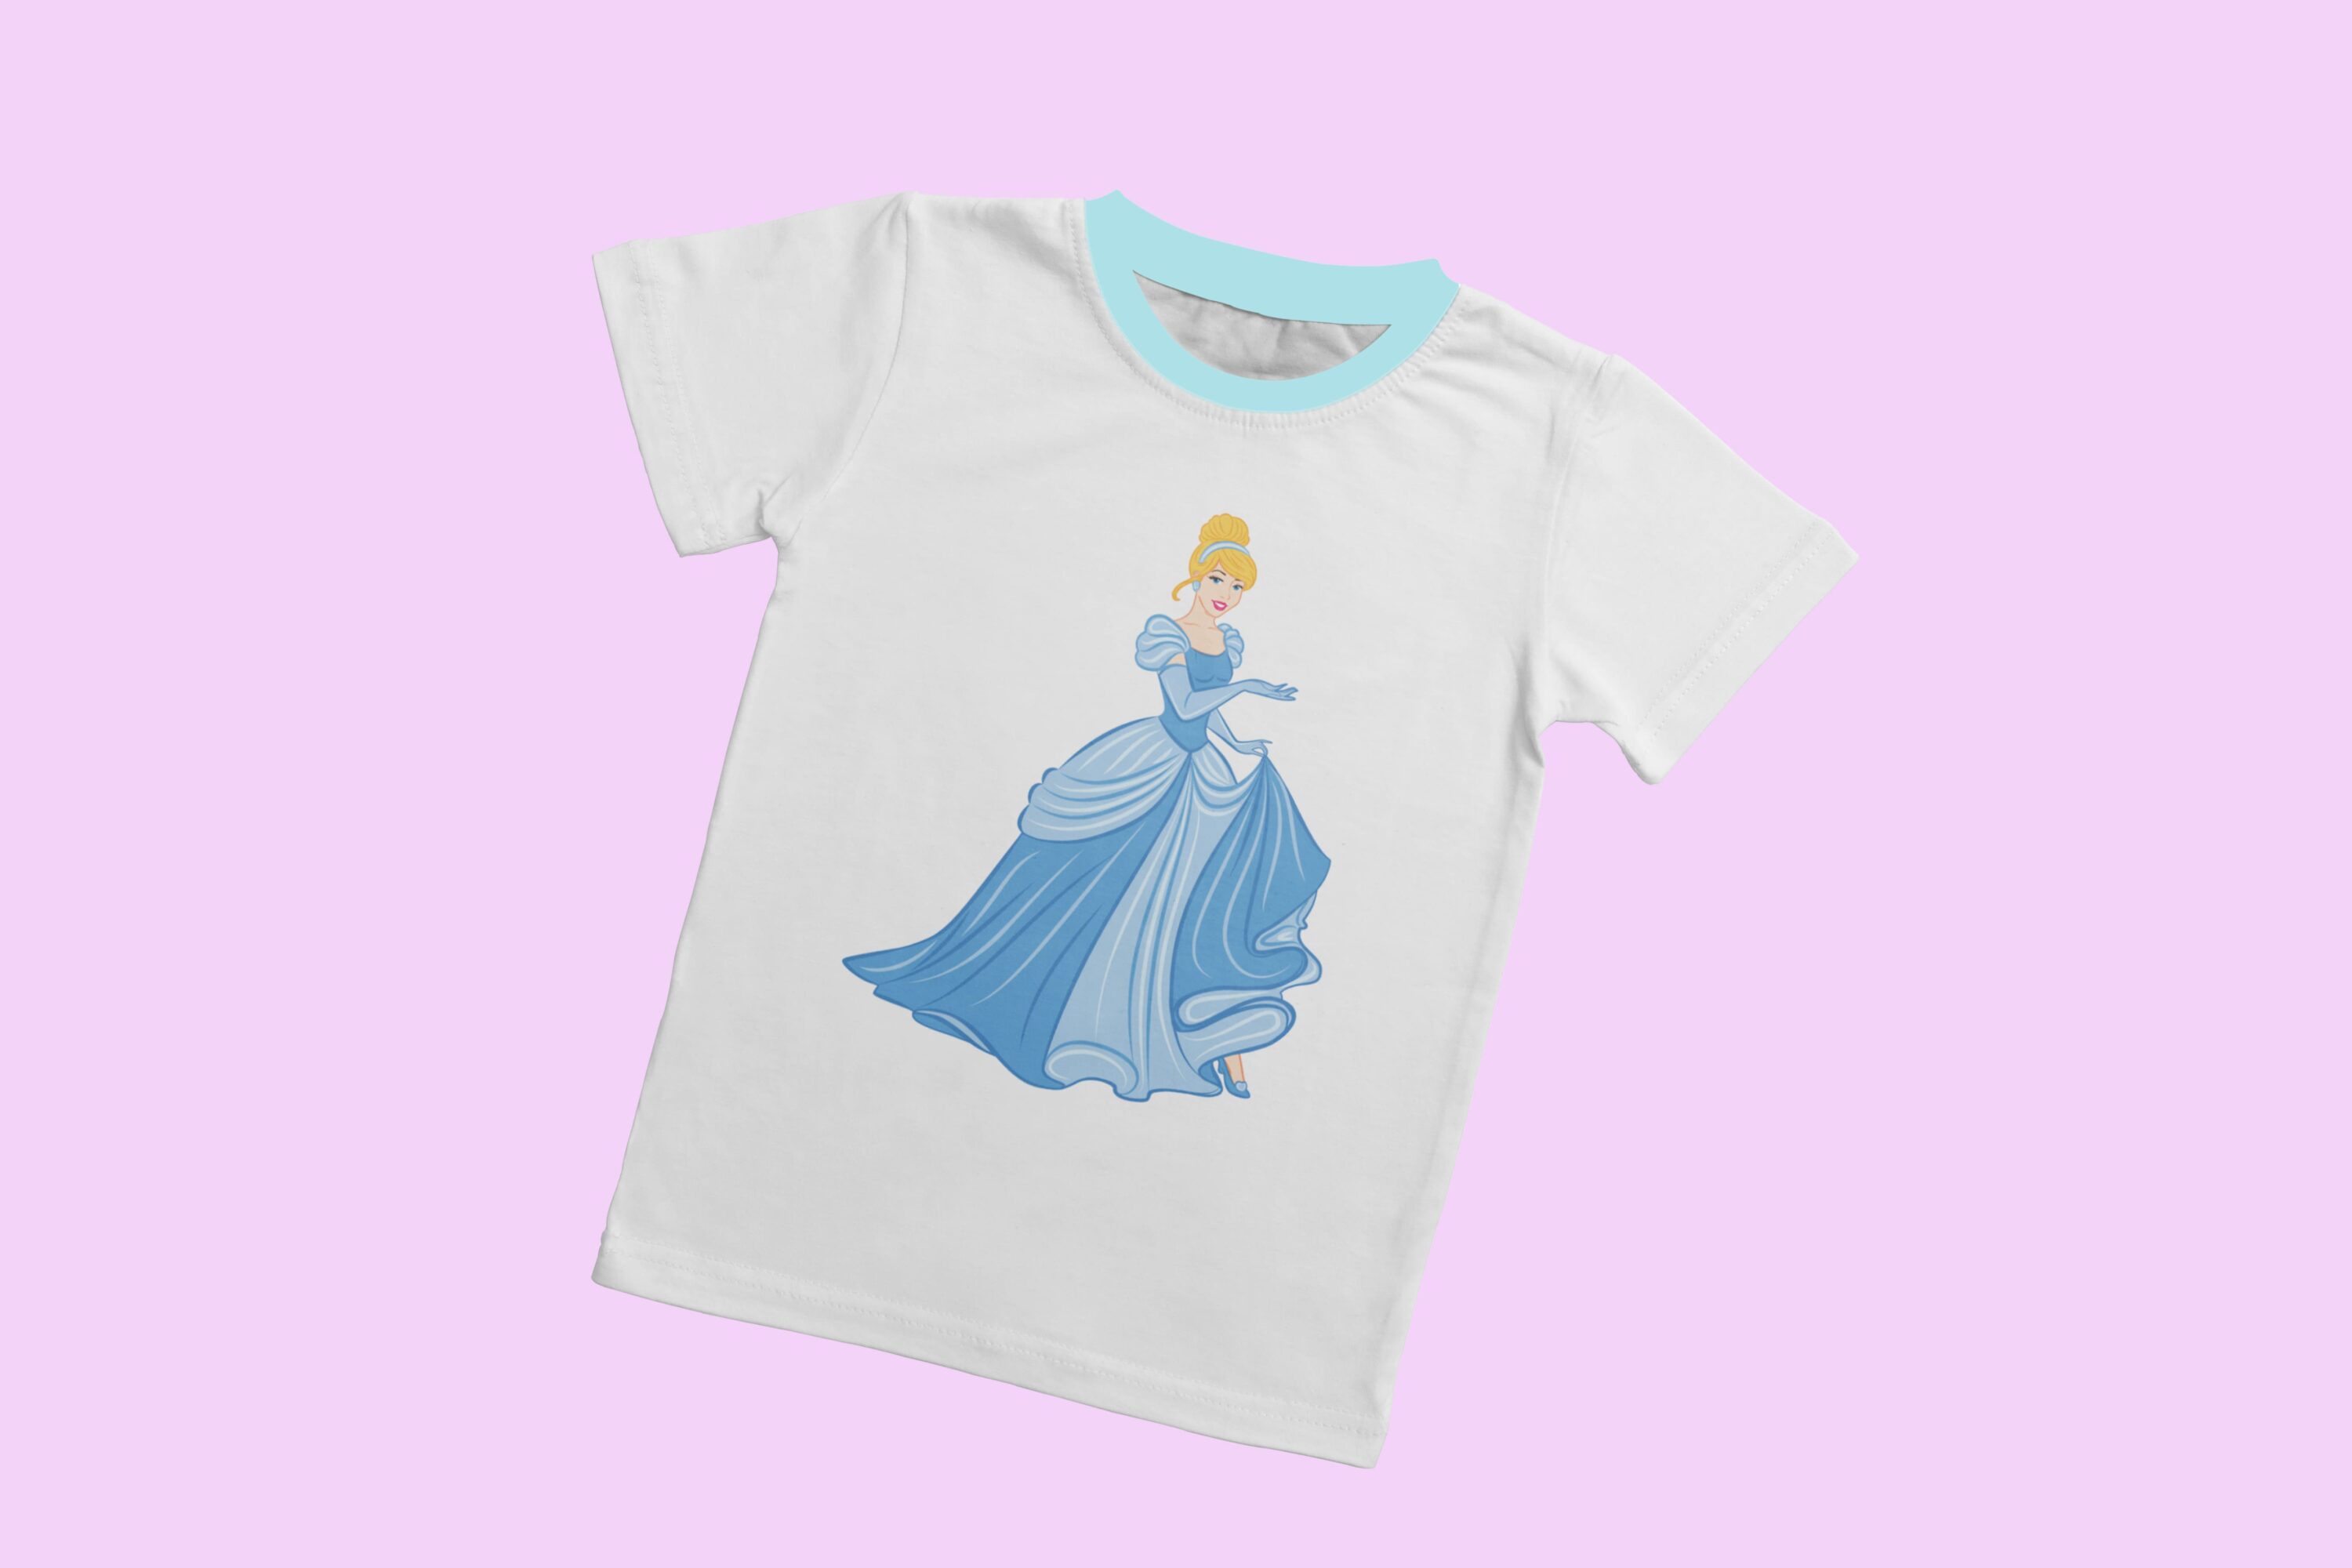 White T-shirt image with irresistible Cinderella print.